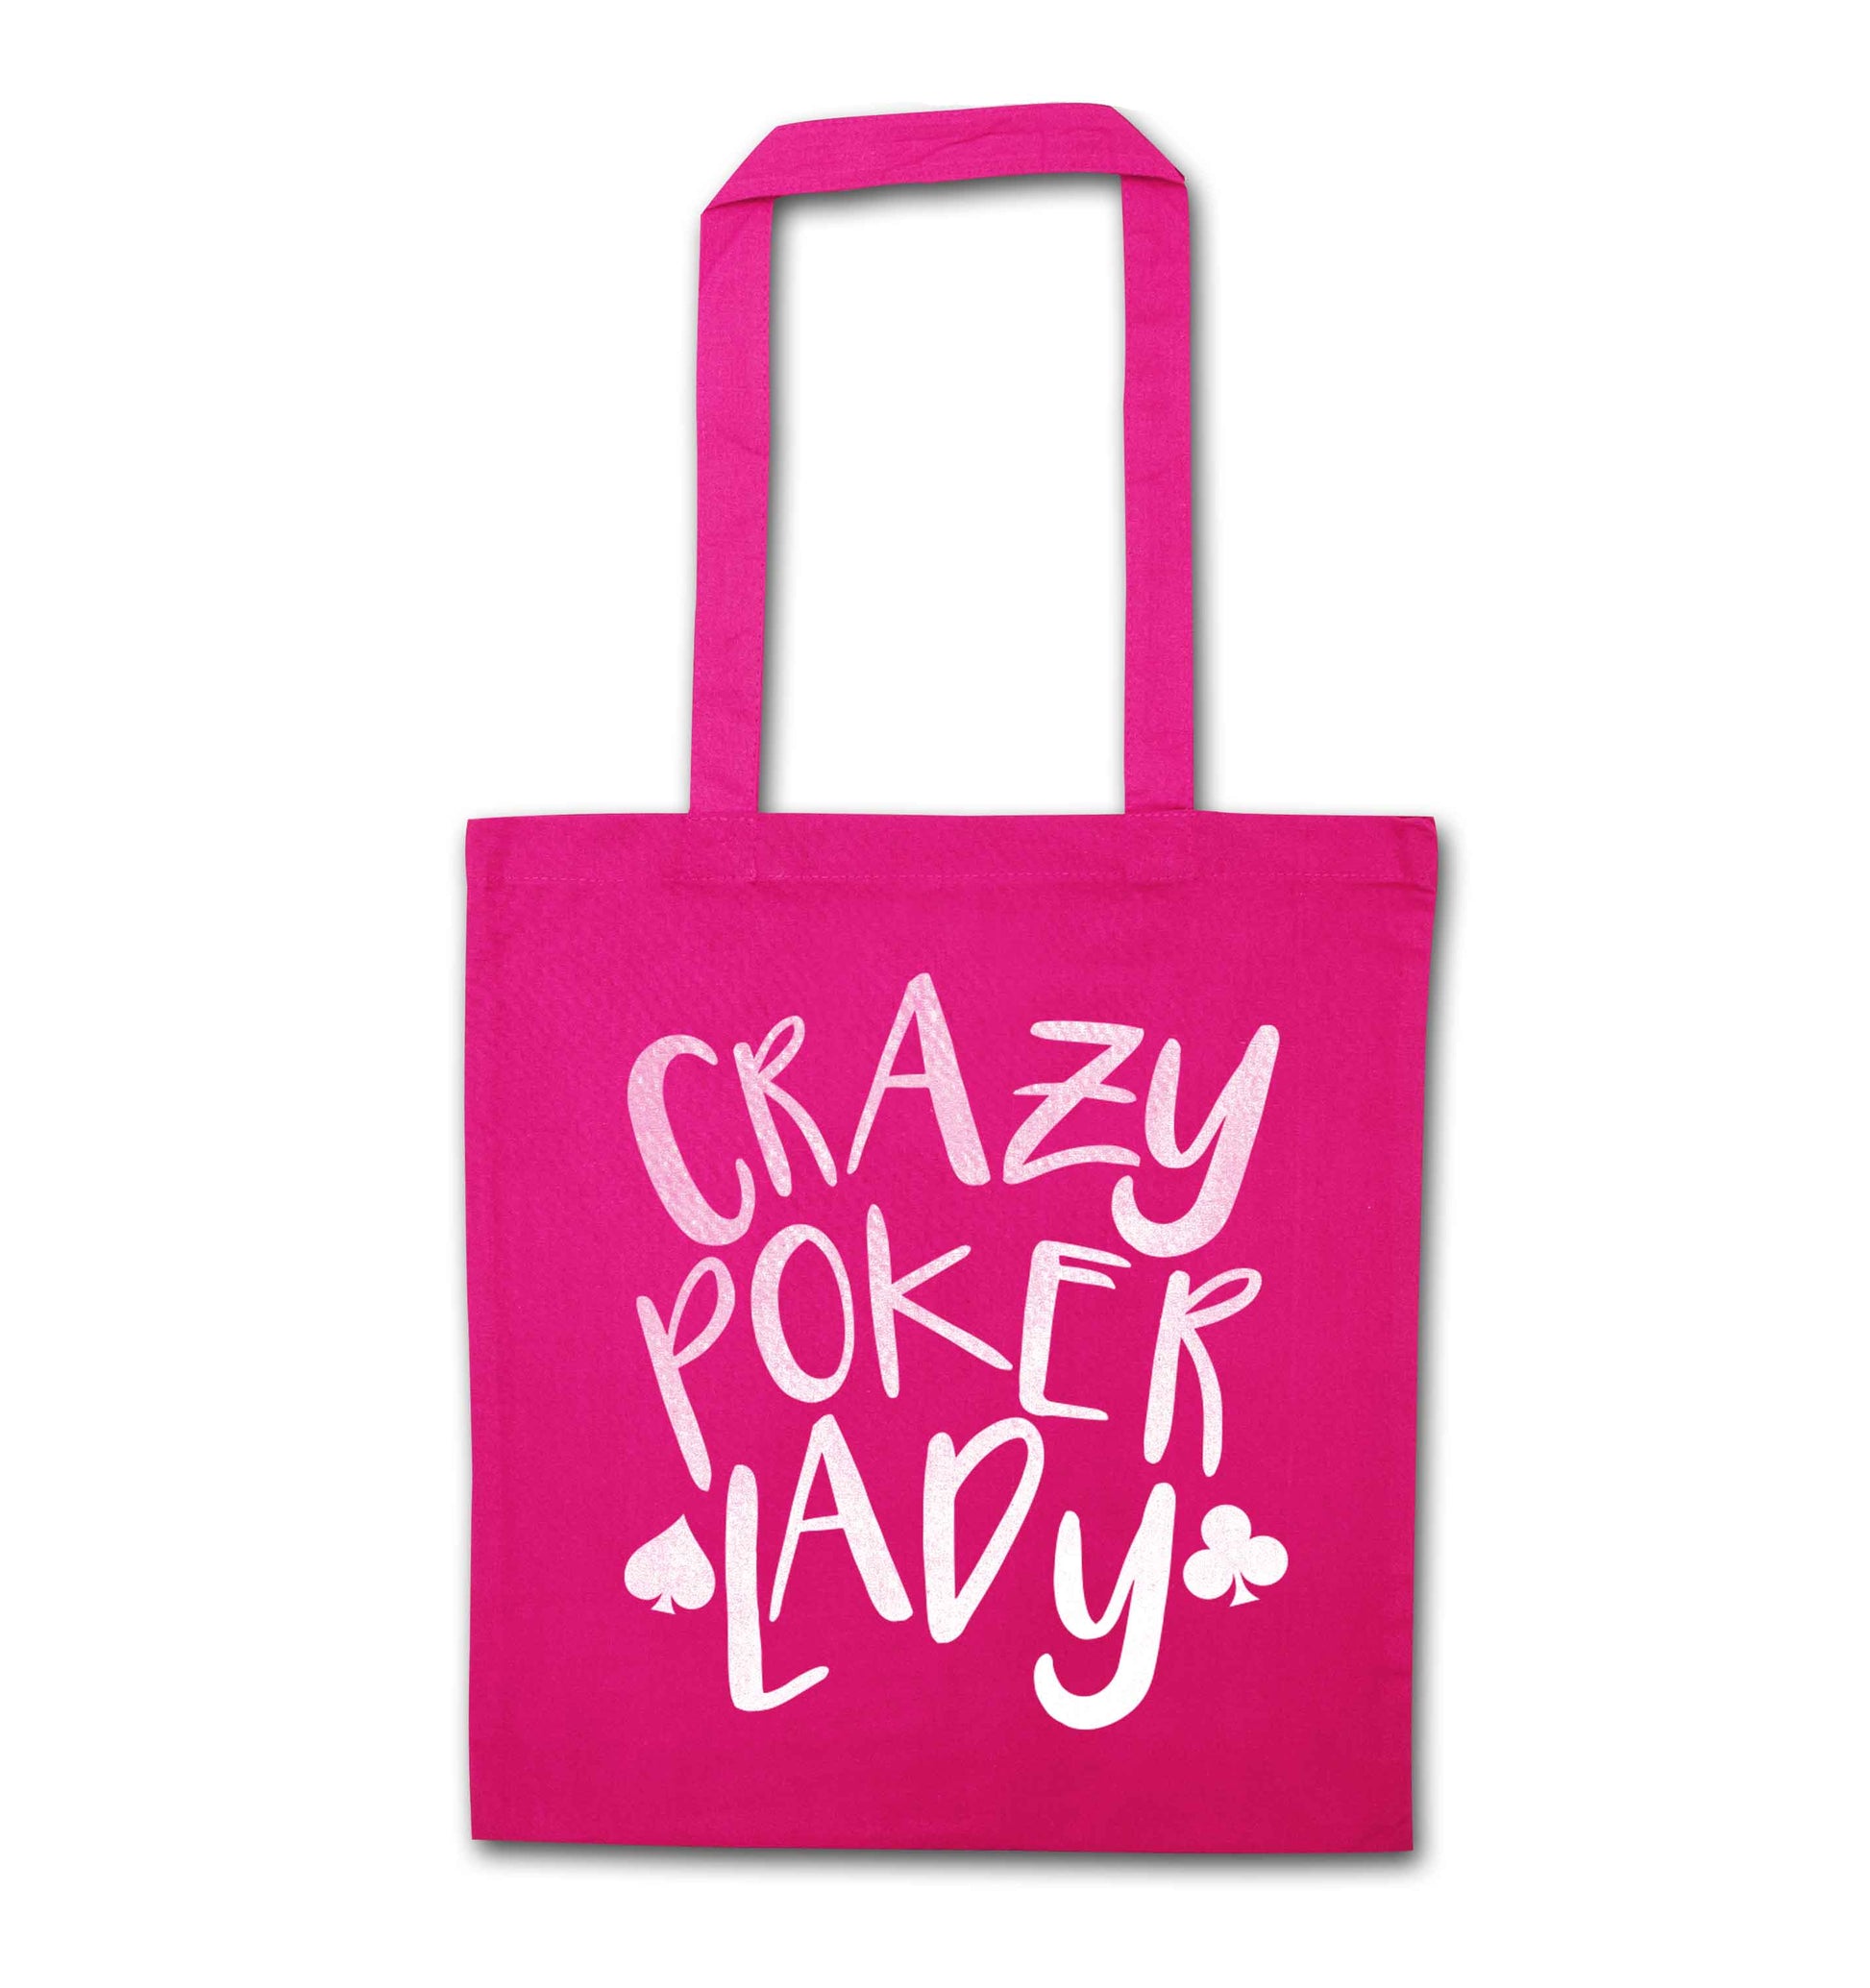 Crazy poker lady pink tote bag